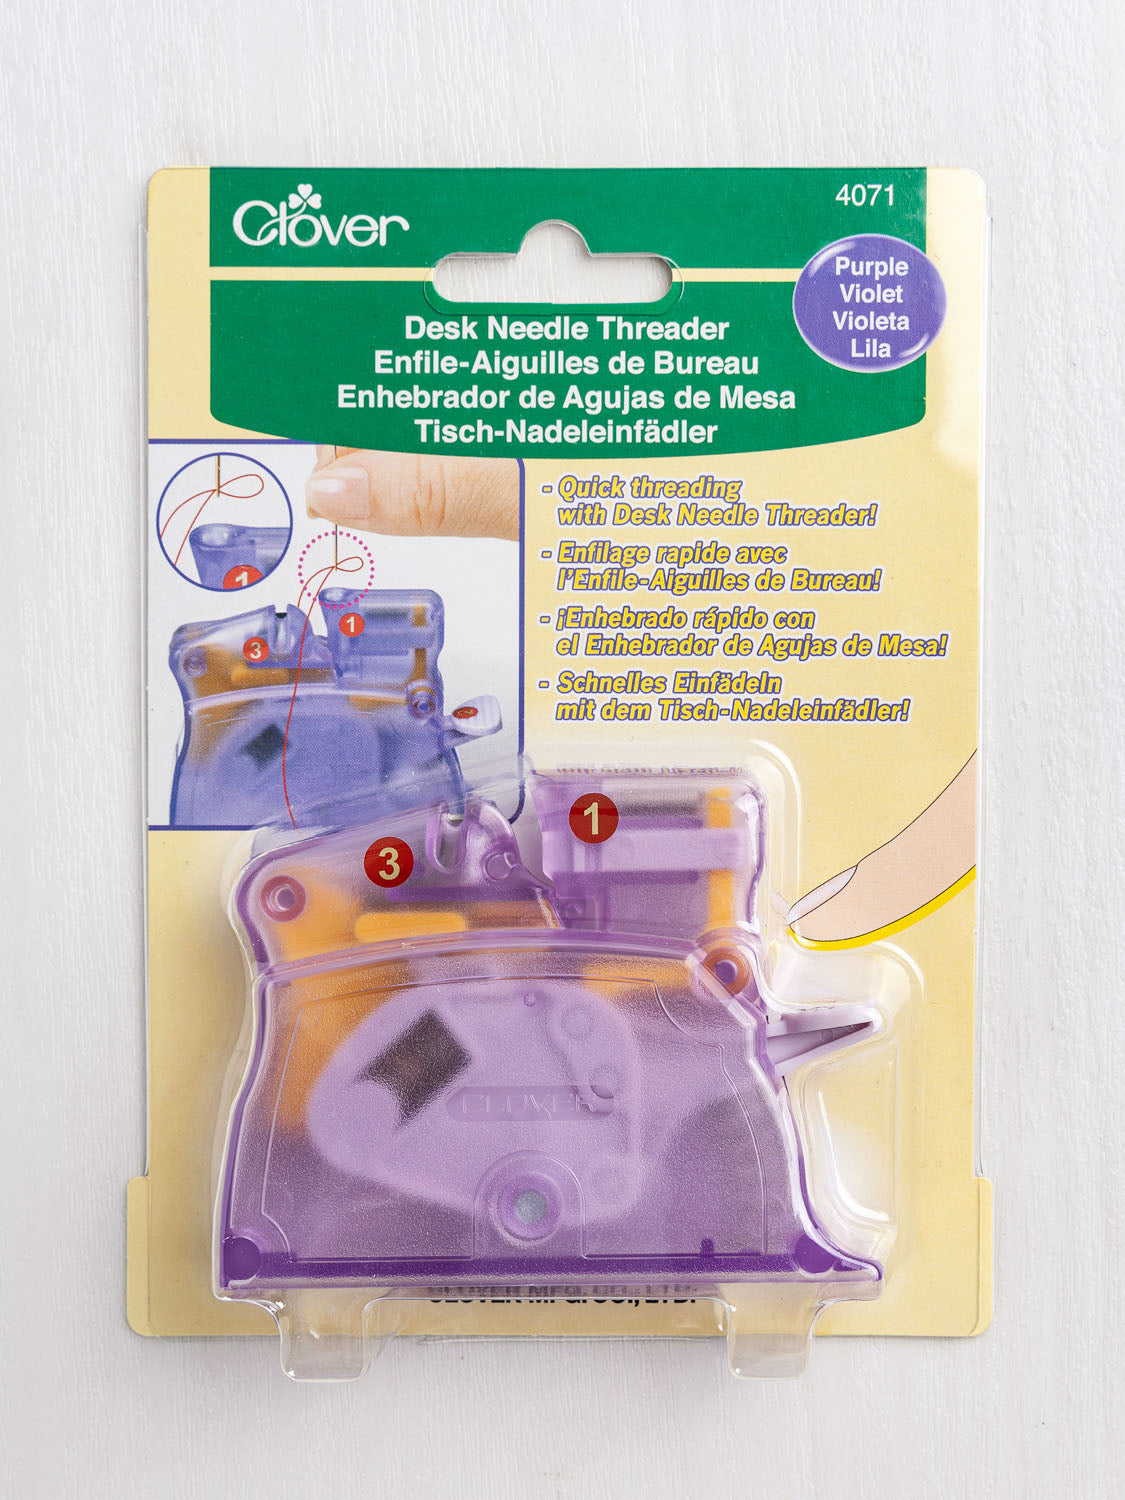 Clover Desk Needle Threader - Purple